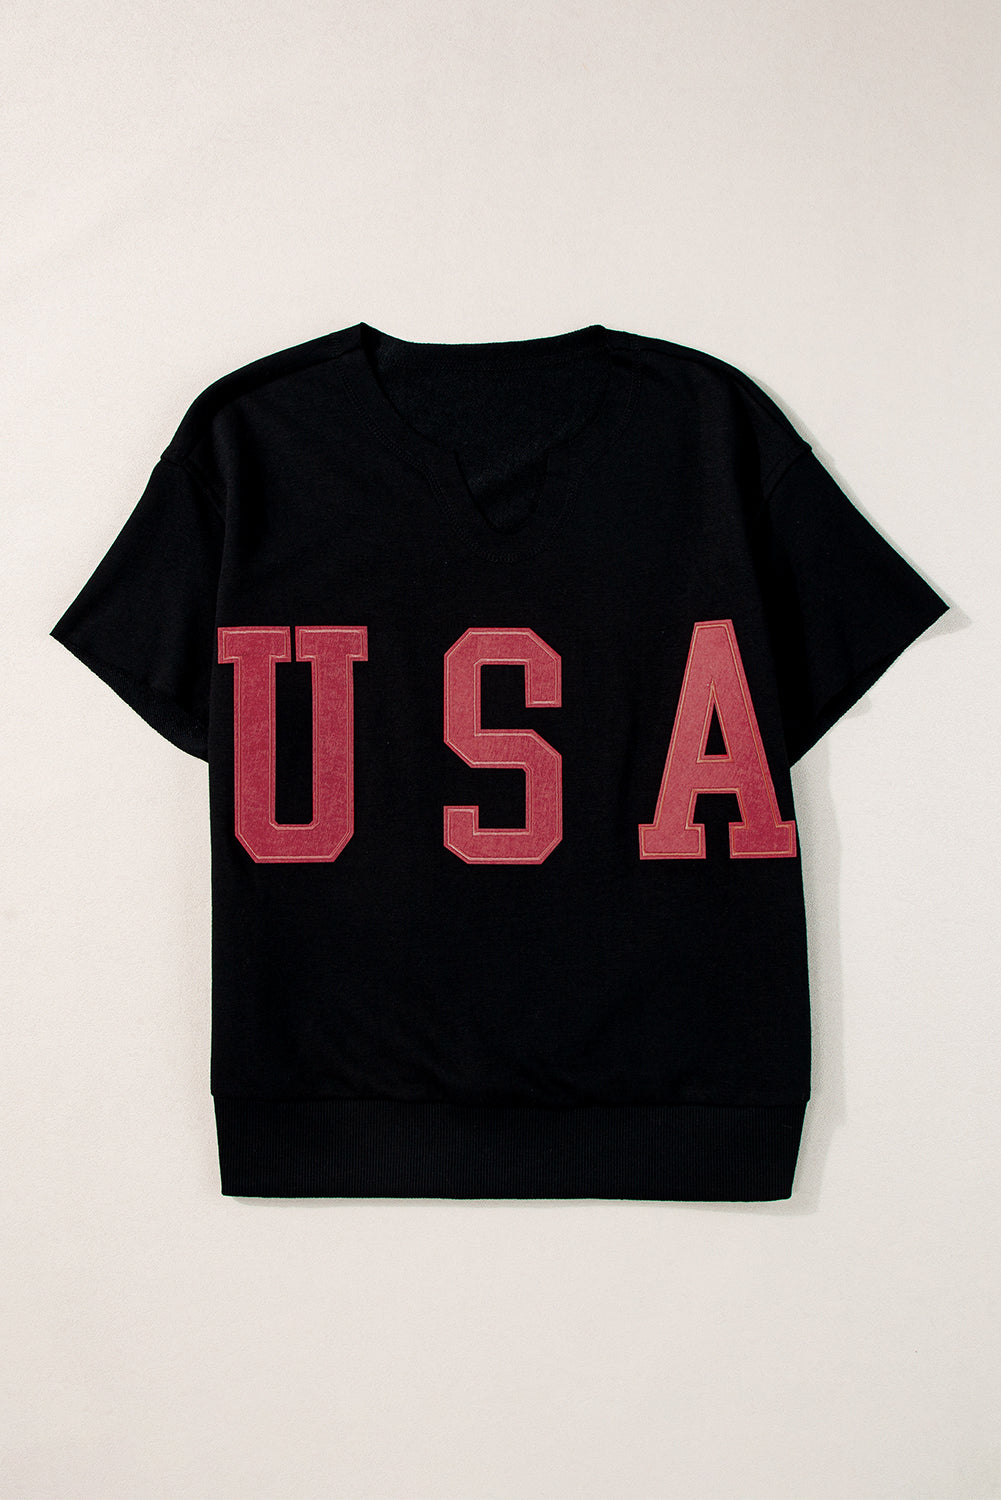 USA Notched Short Sleeve T-Shirt Black